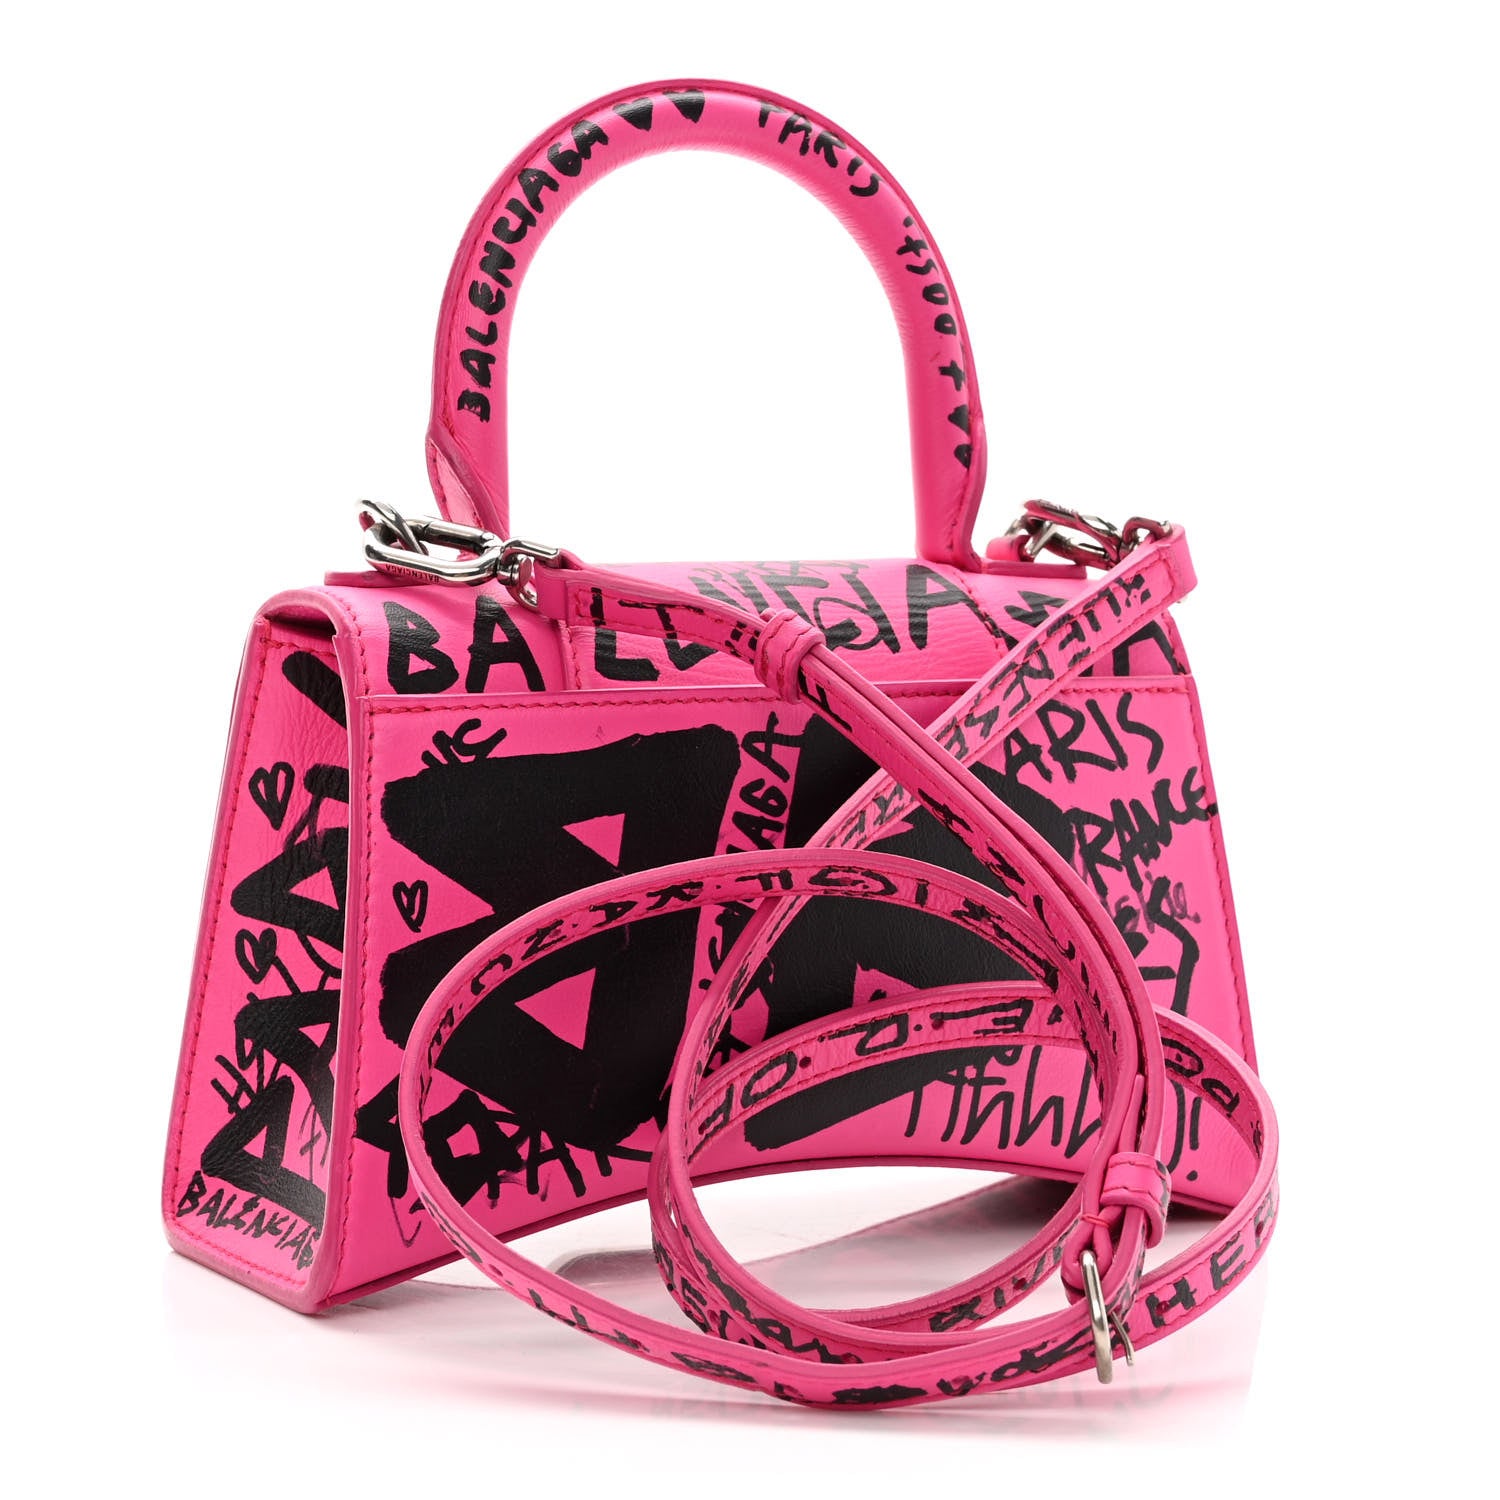 Balenciaga Hourglass Xs Graffiti Print Tote in Pink